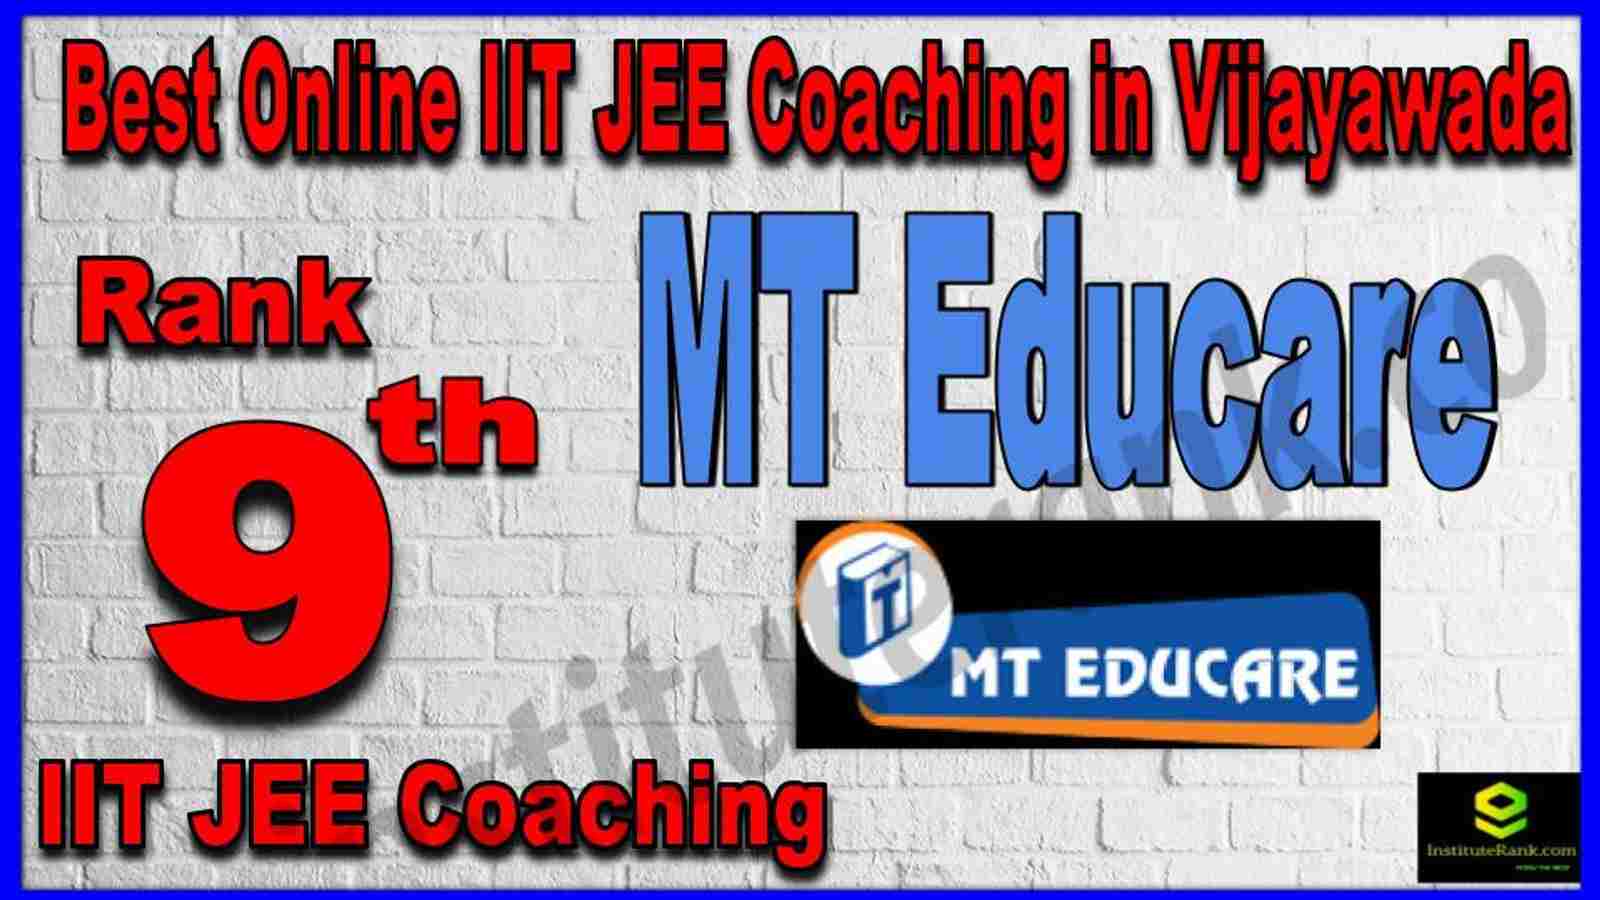 Rank 9th Best Online IIT JEE Coaching in Vijayawada